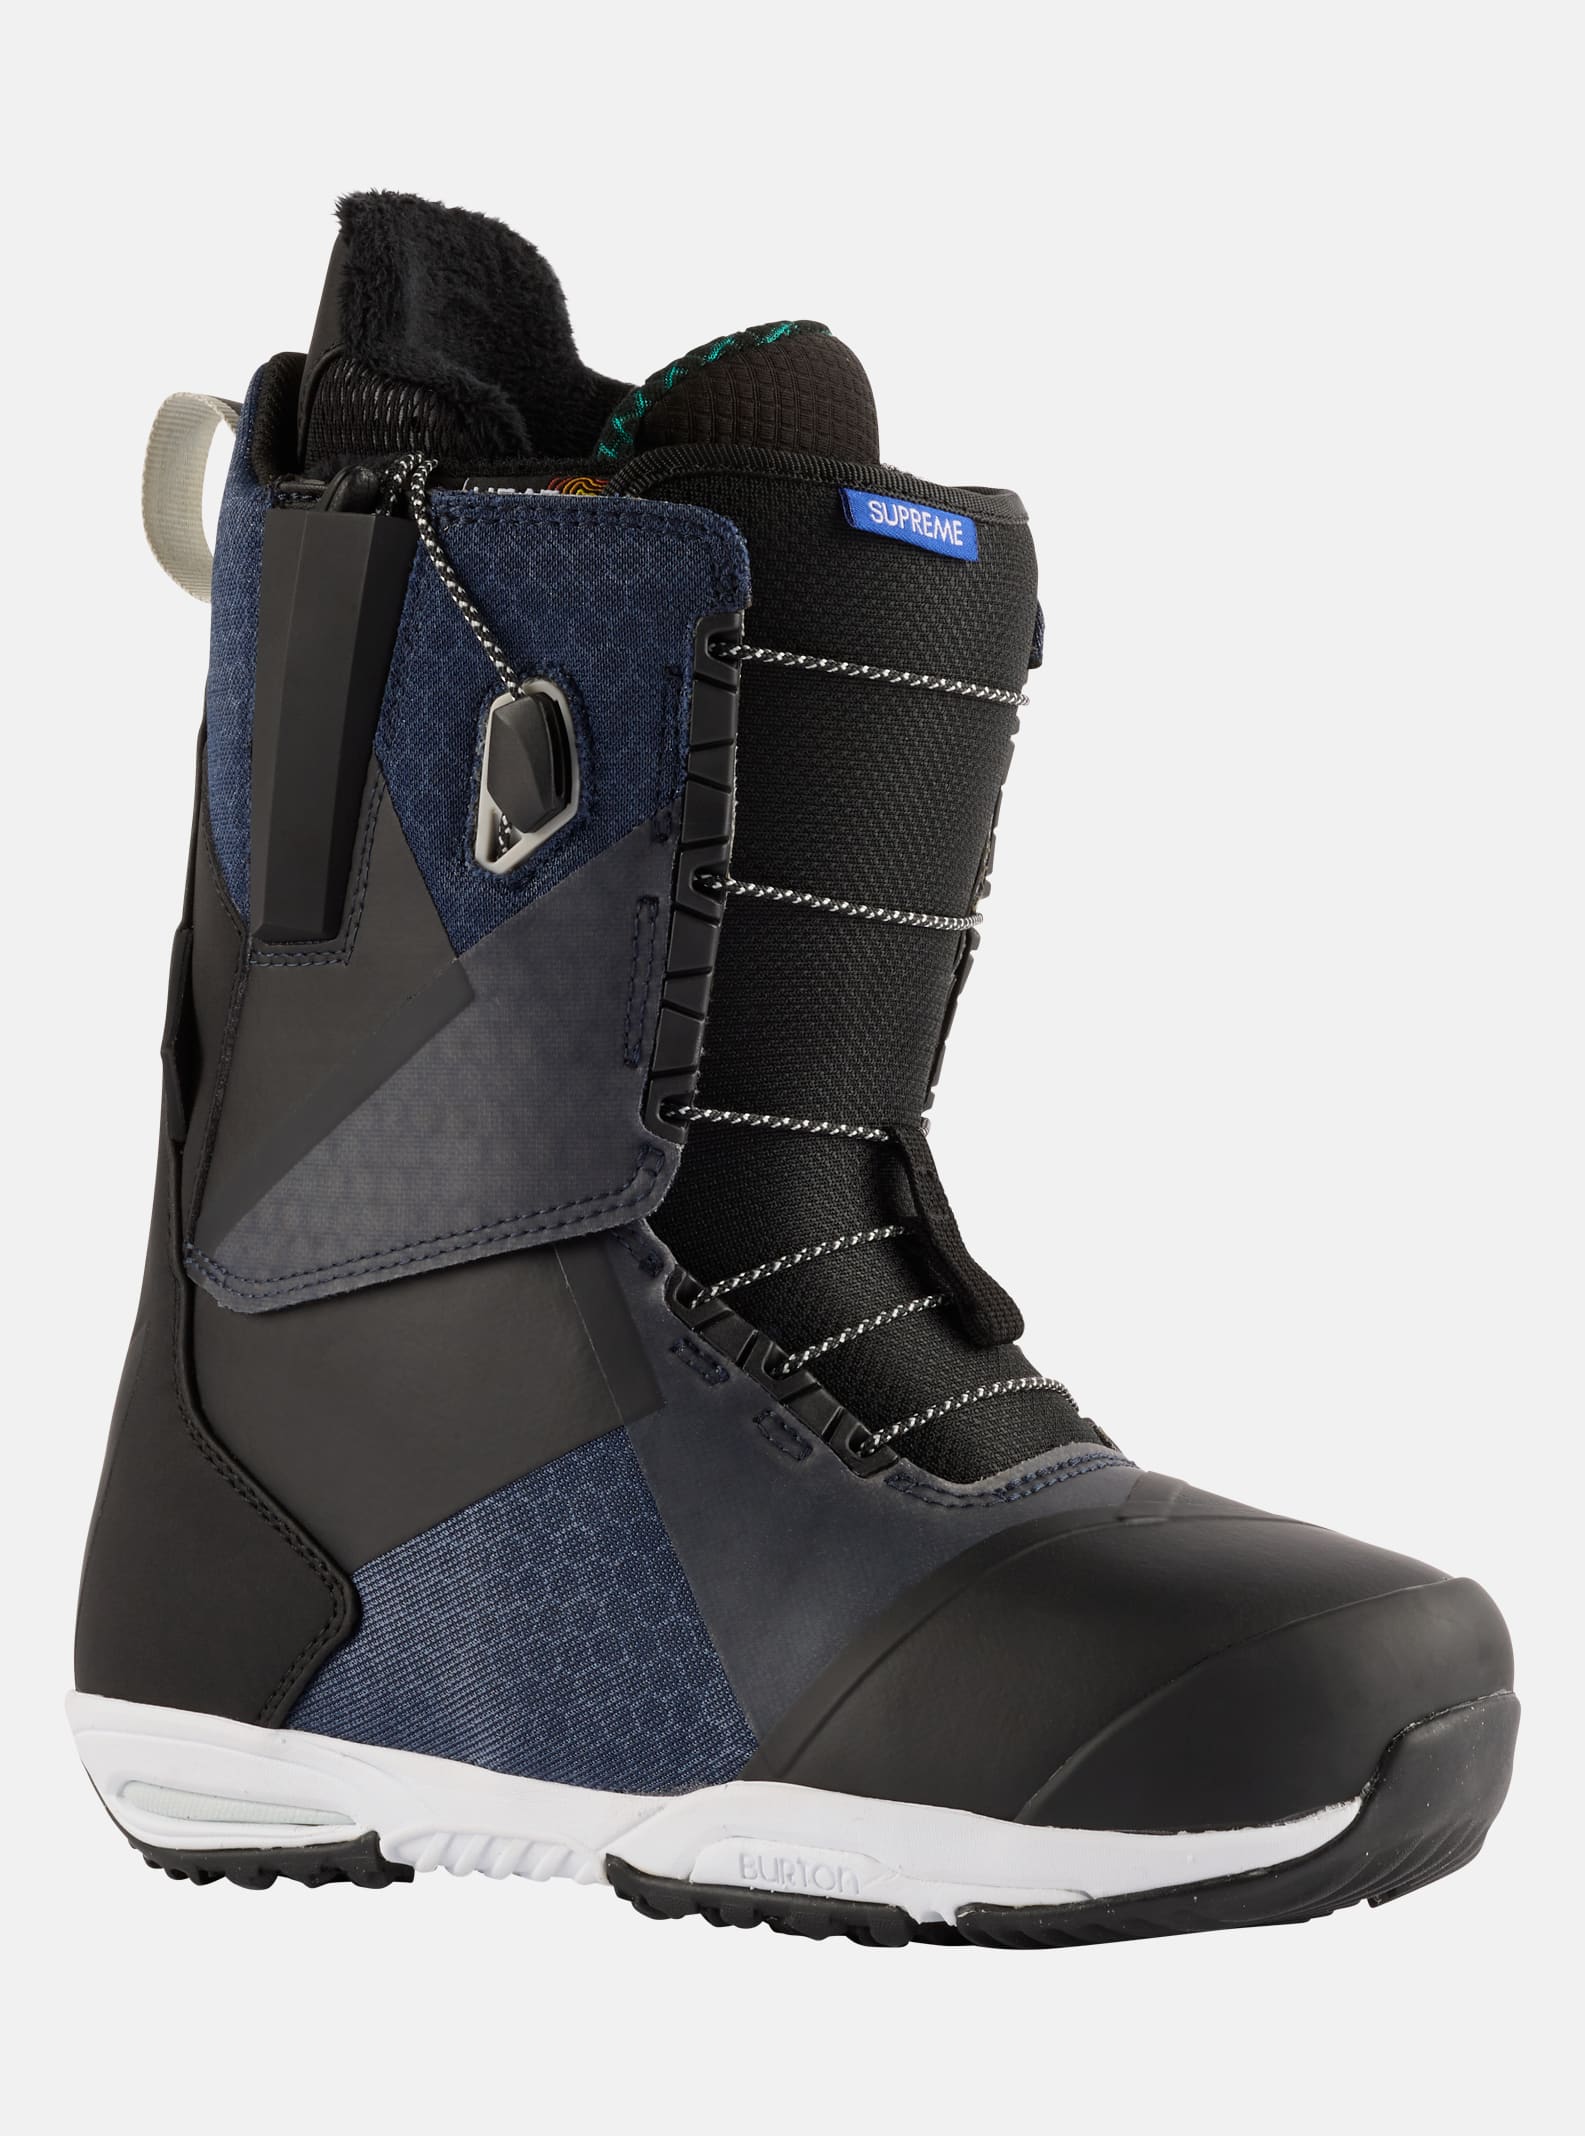 Boots C20 NIDUS snowboard